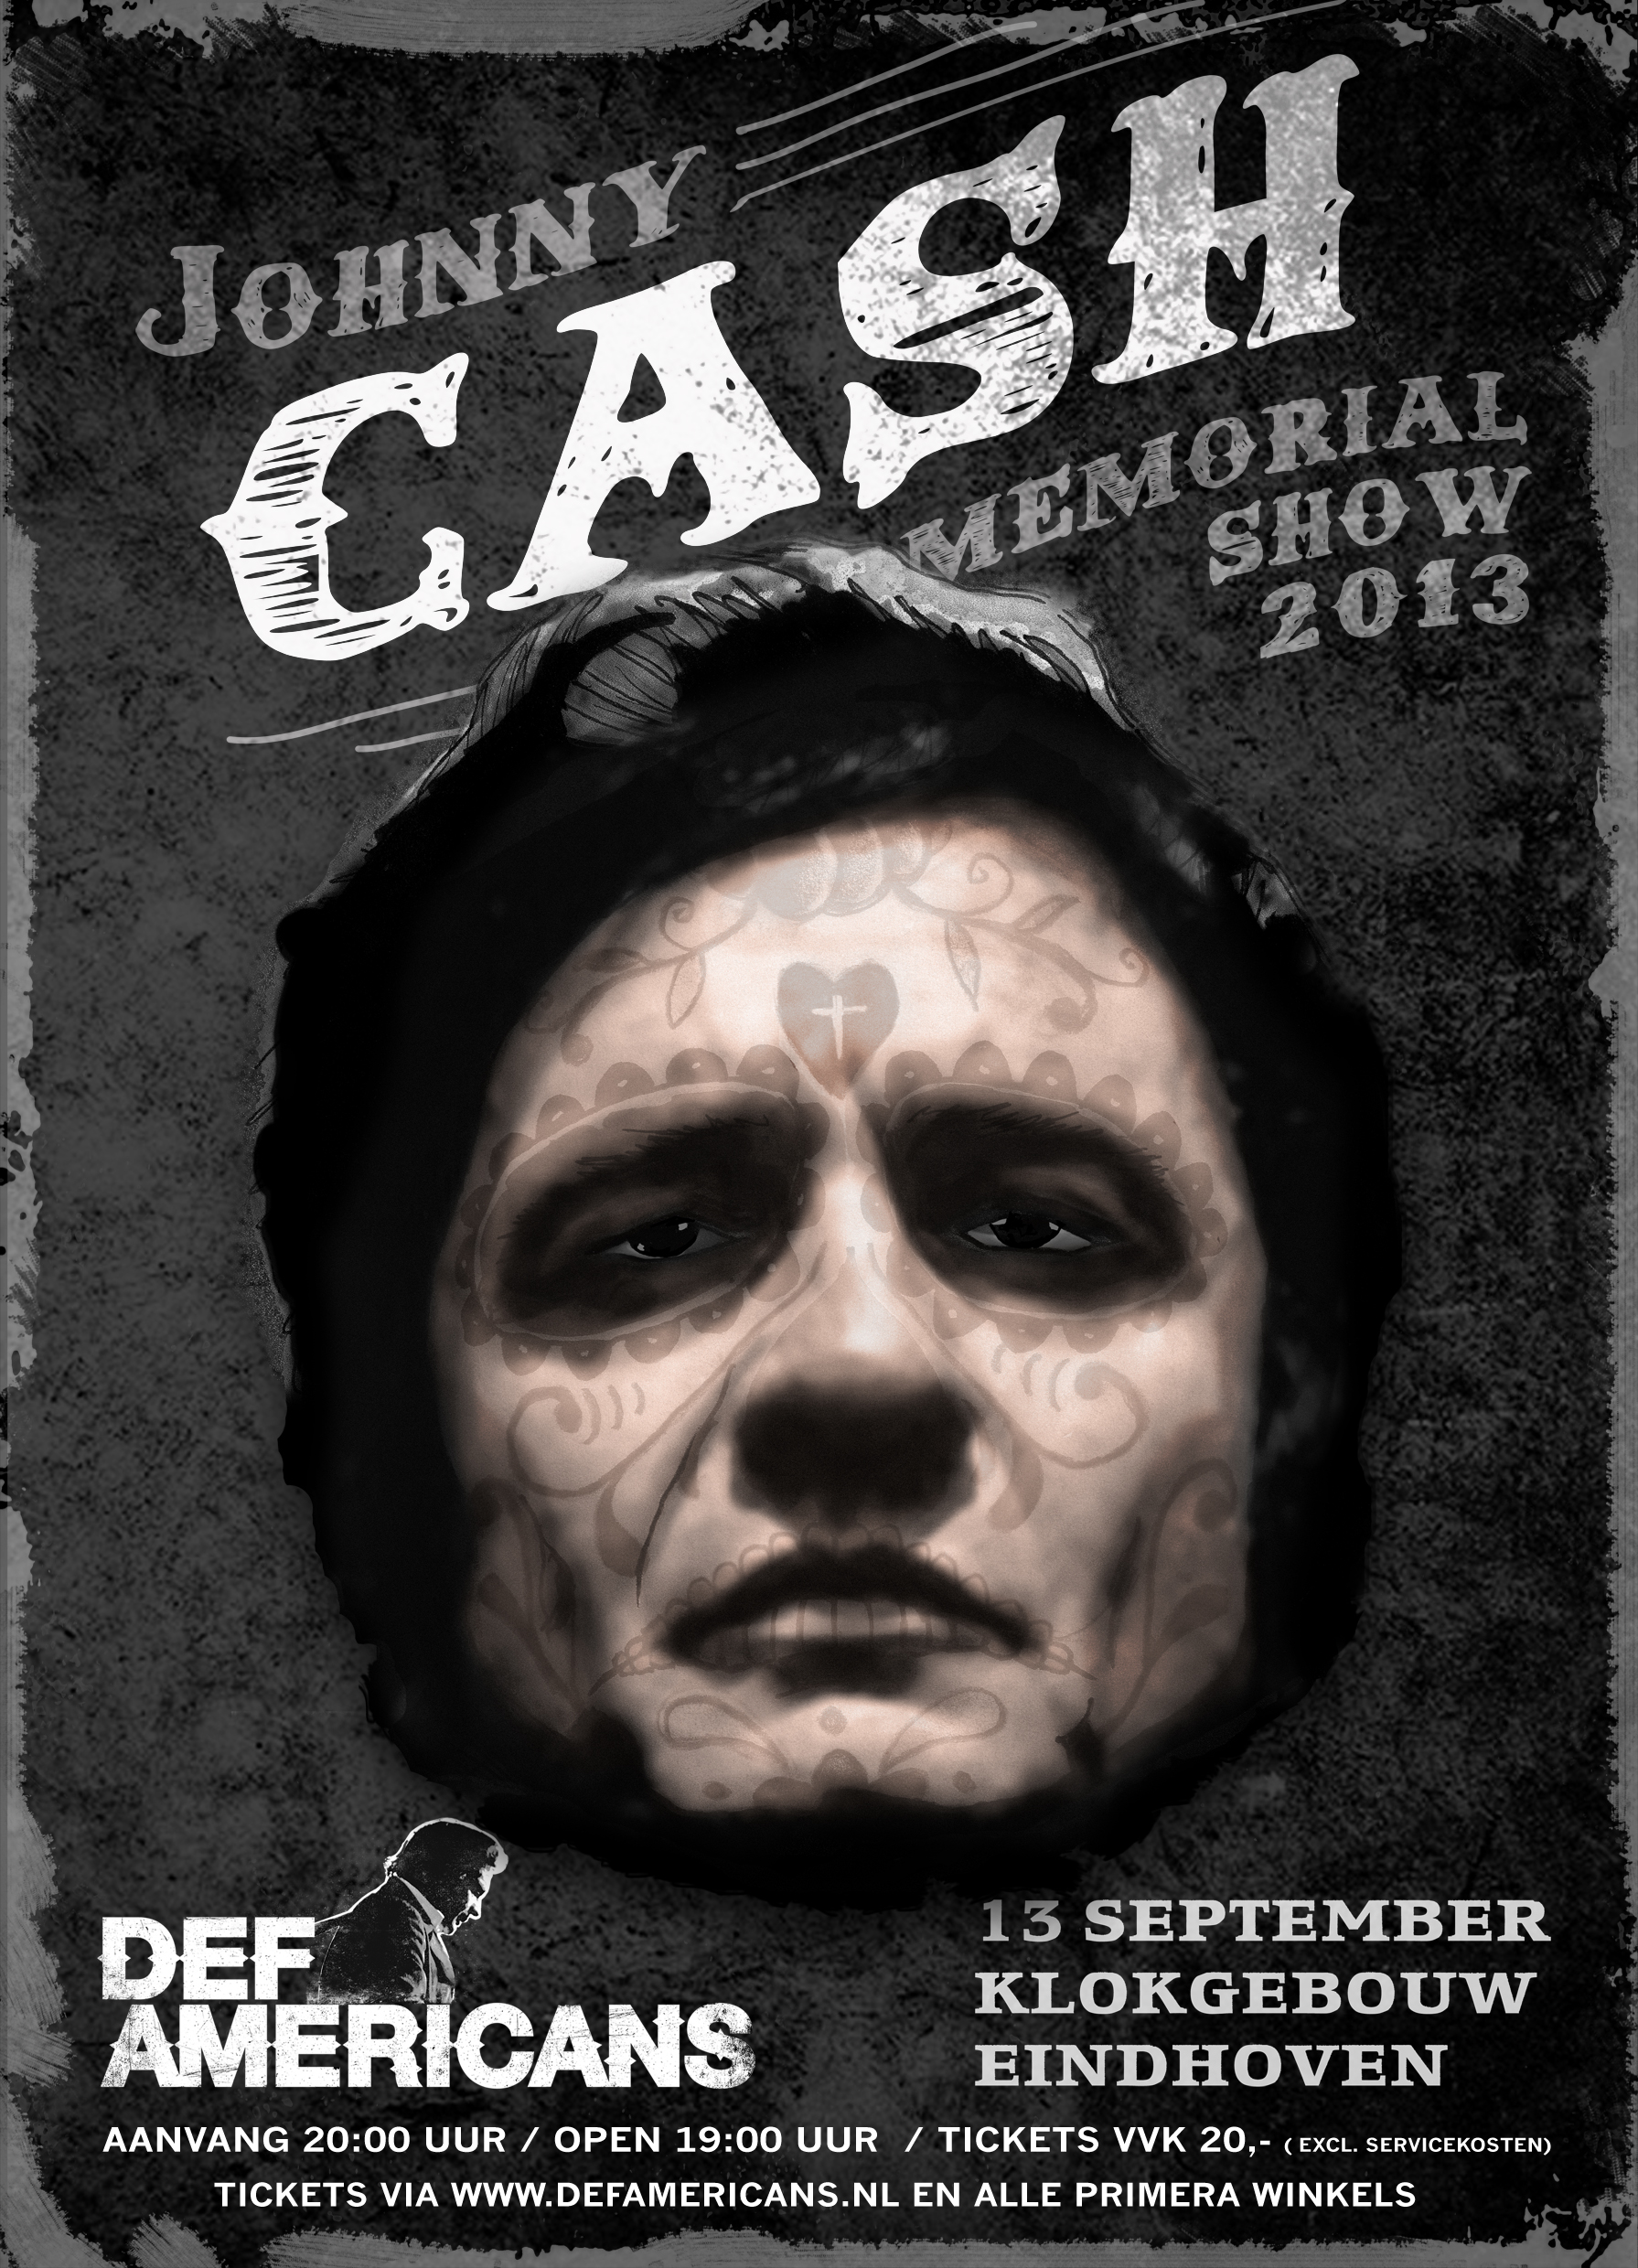 Promo Johnny Cash Memorial